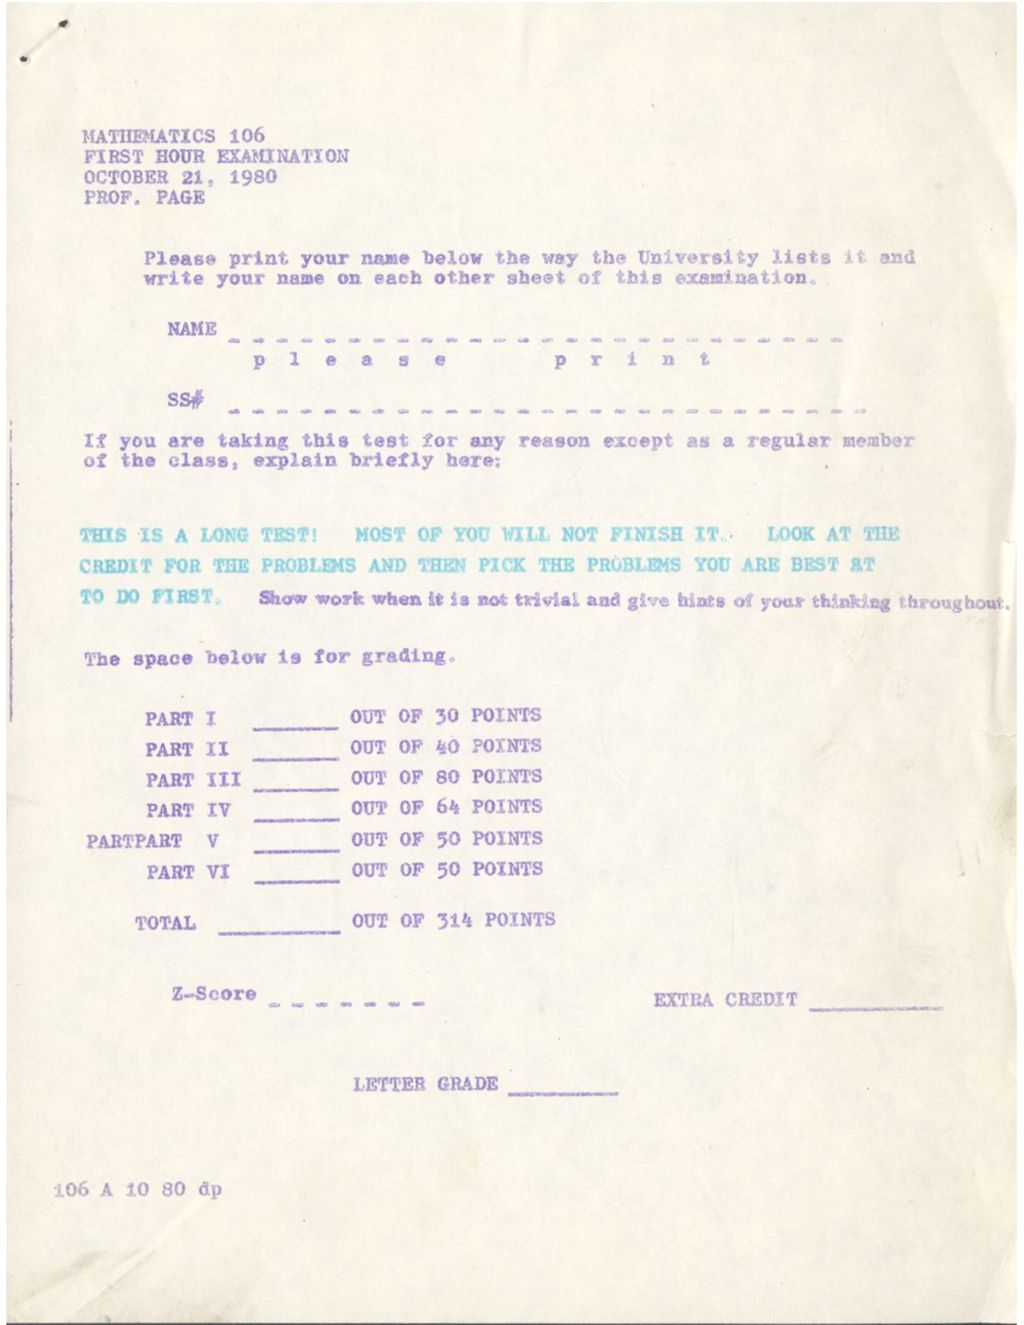 Miniature of Math 106 First Hour Examination Oct. 21, 1980